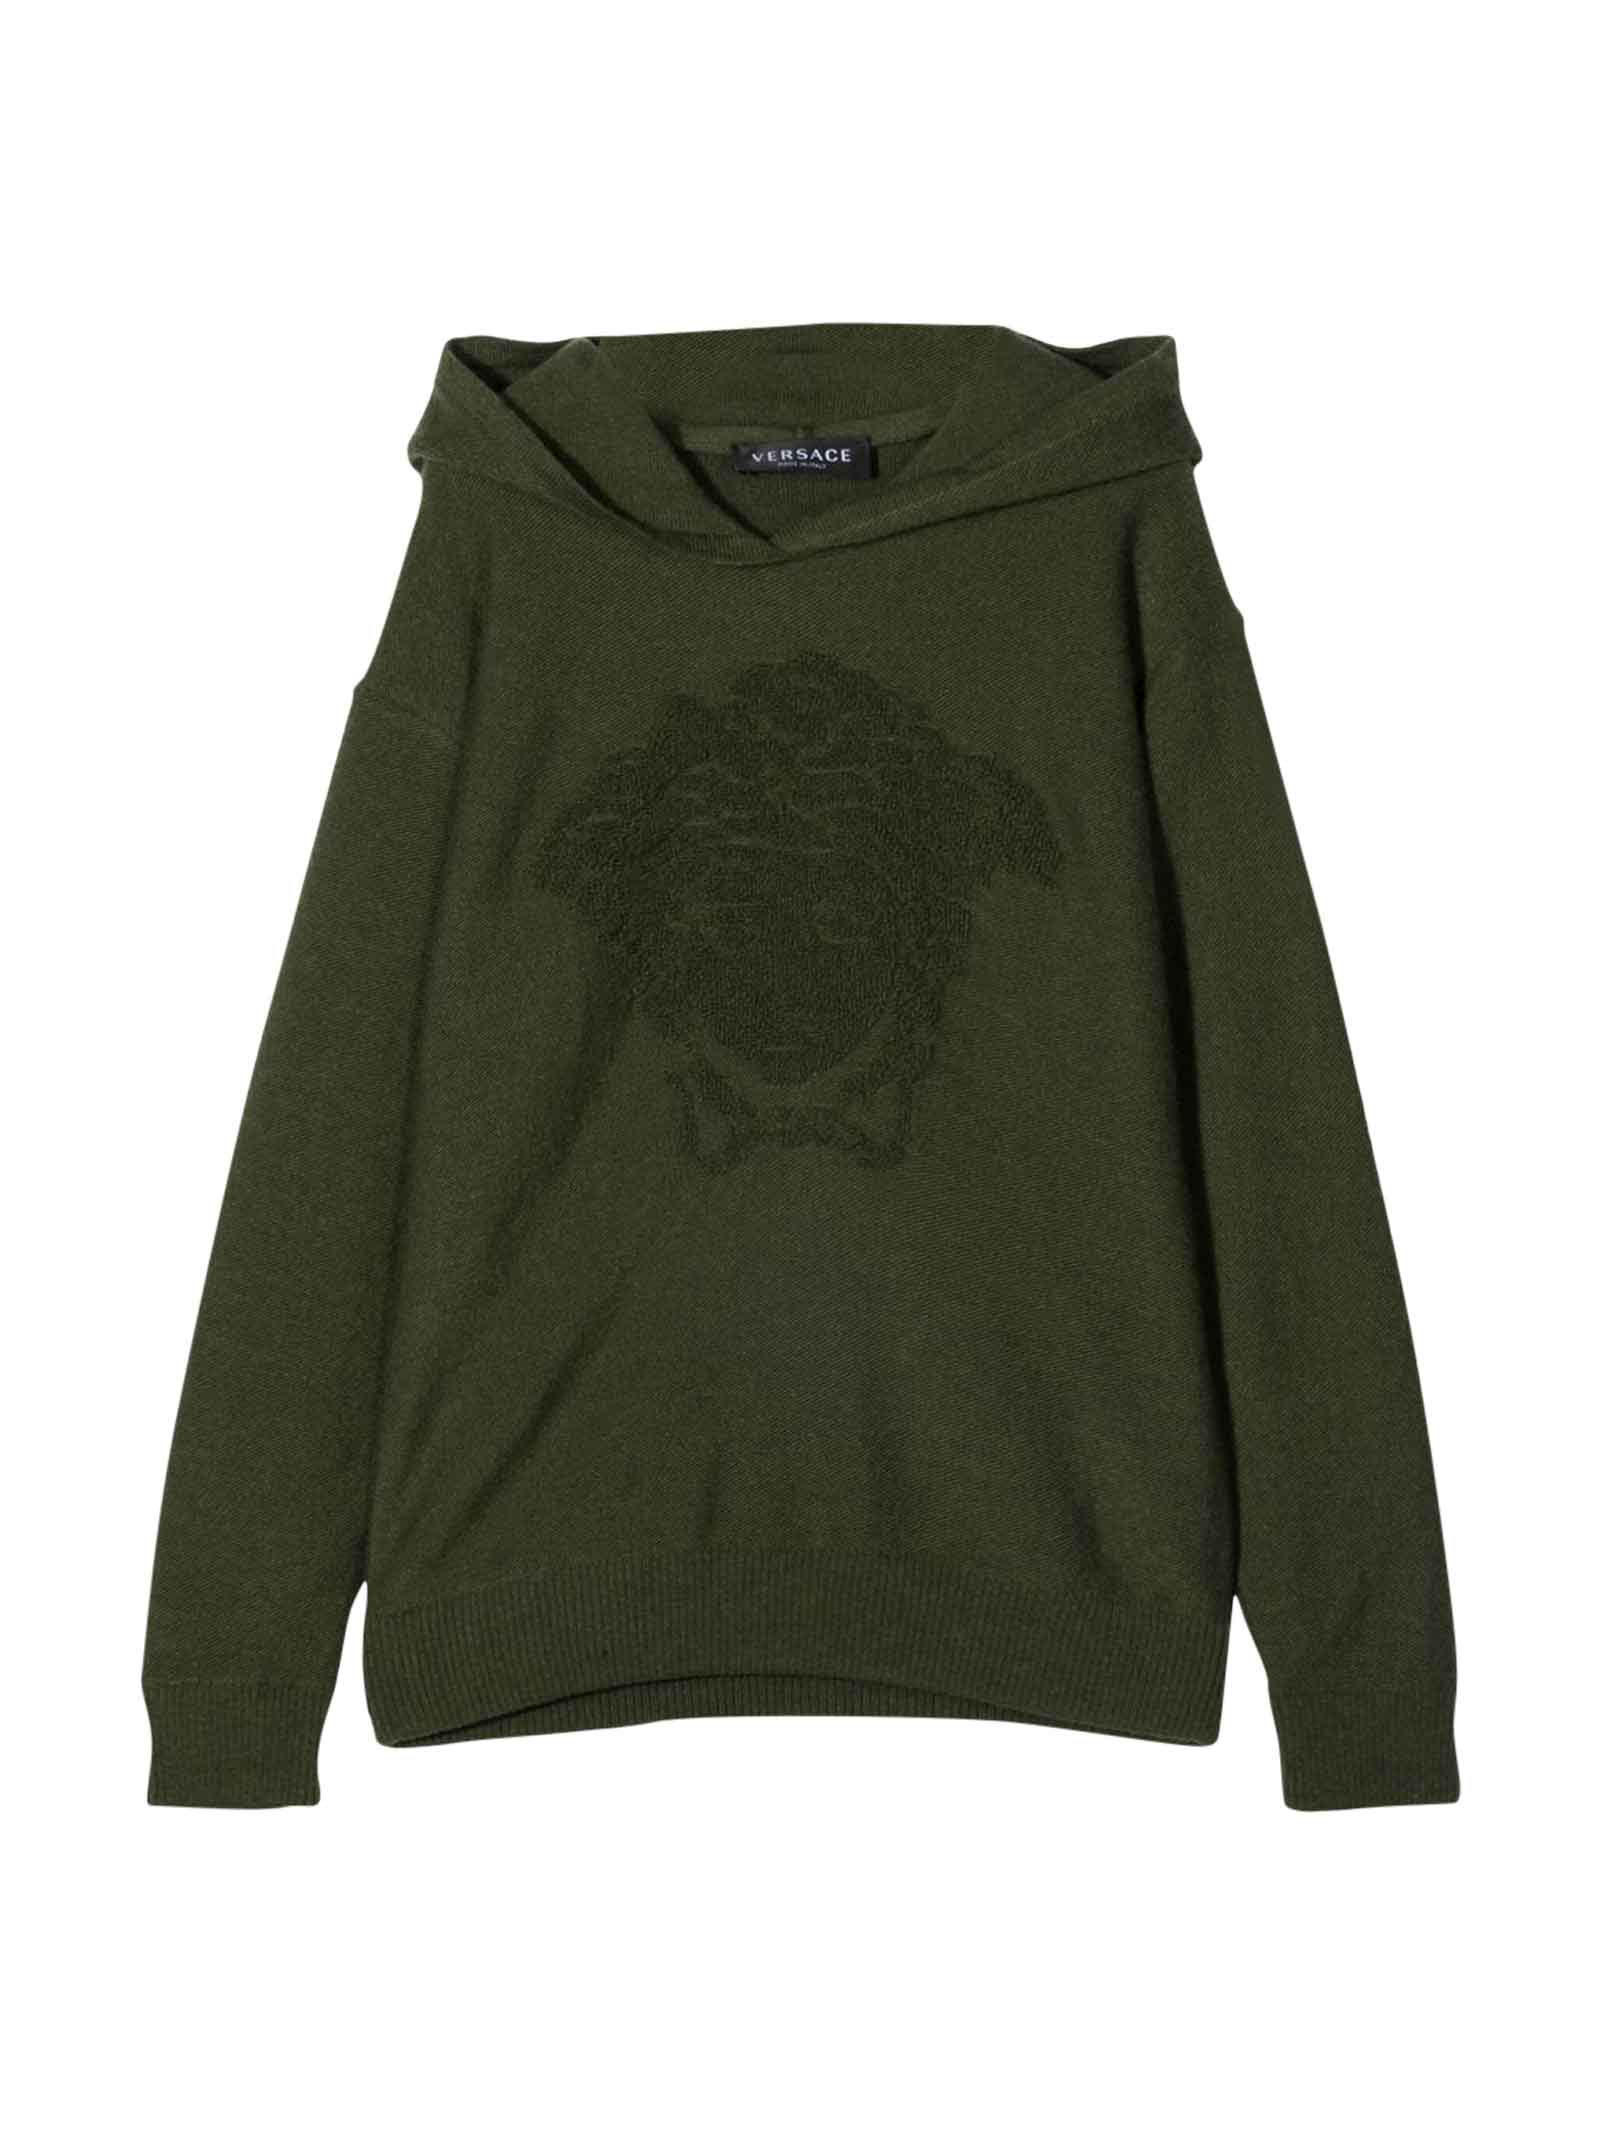 Versace Young Boys Military Green Sweatshirt